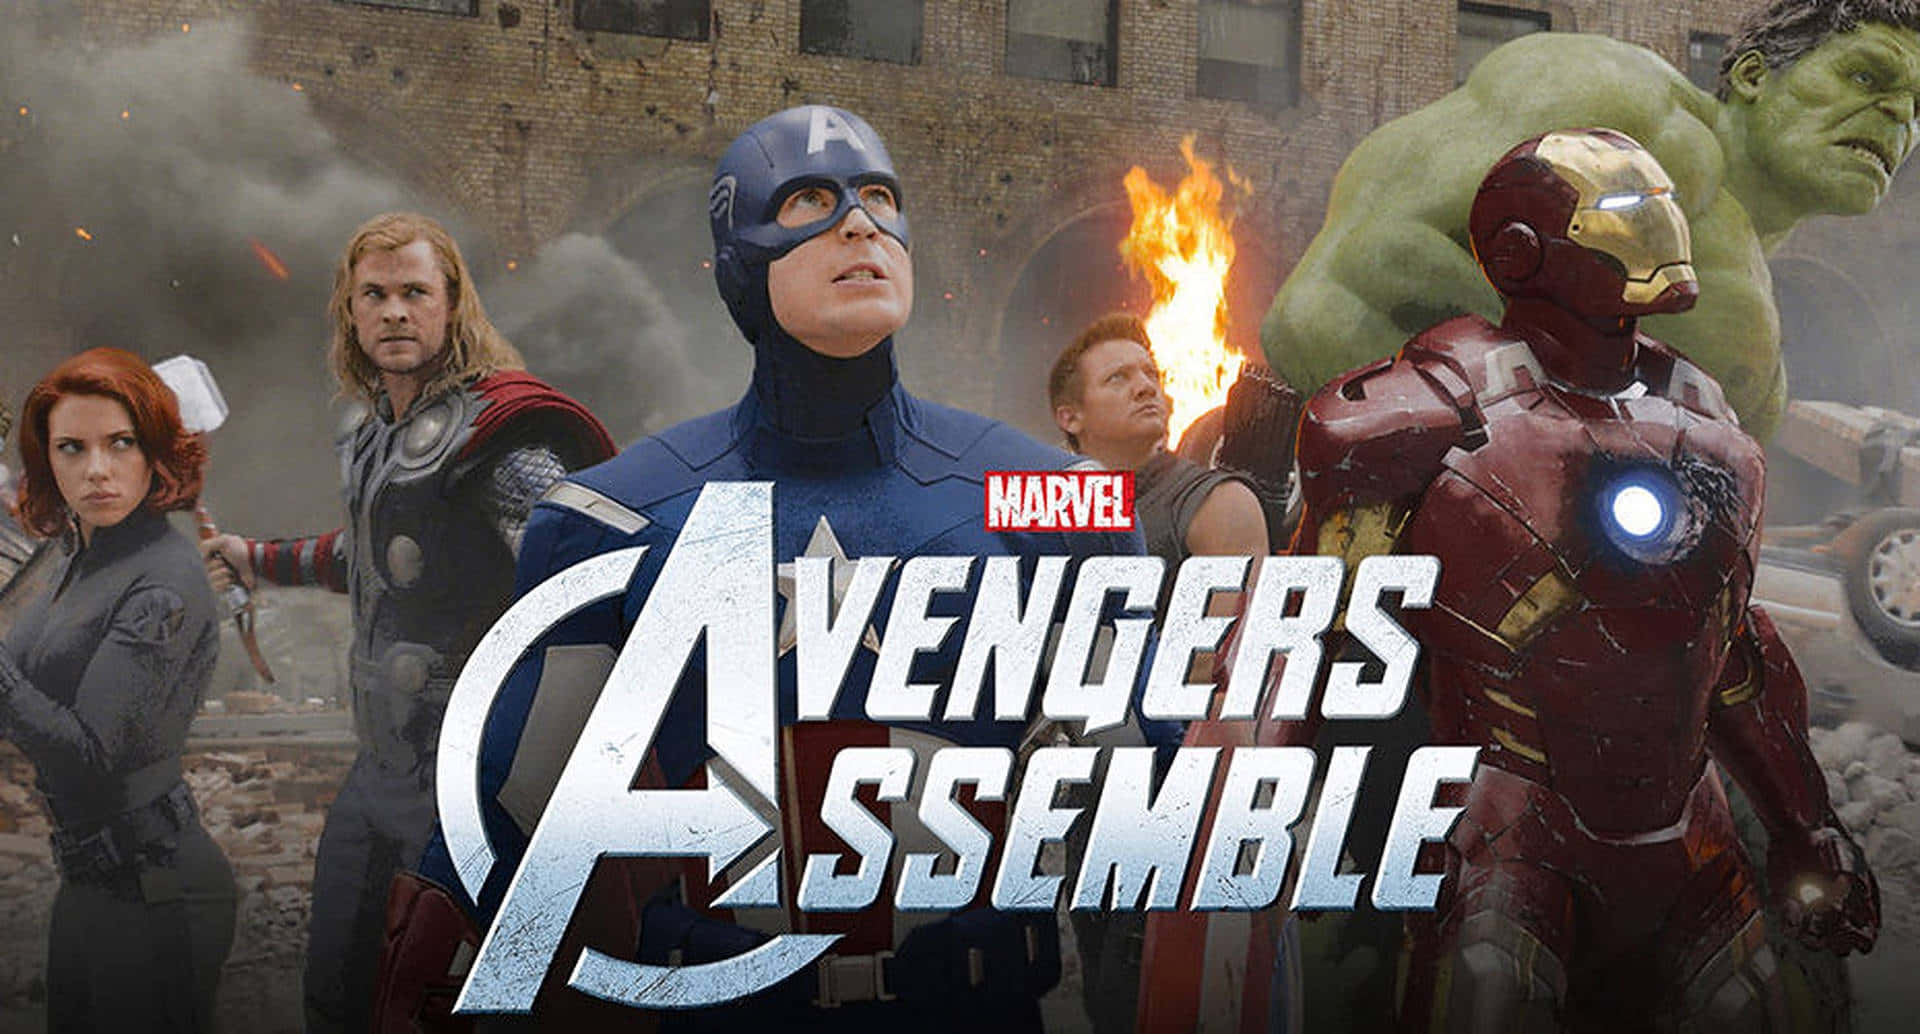 Iron Man and Captain America Unite to Take on the Super Villain